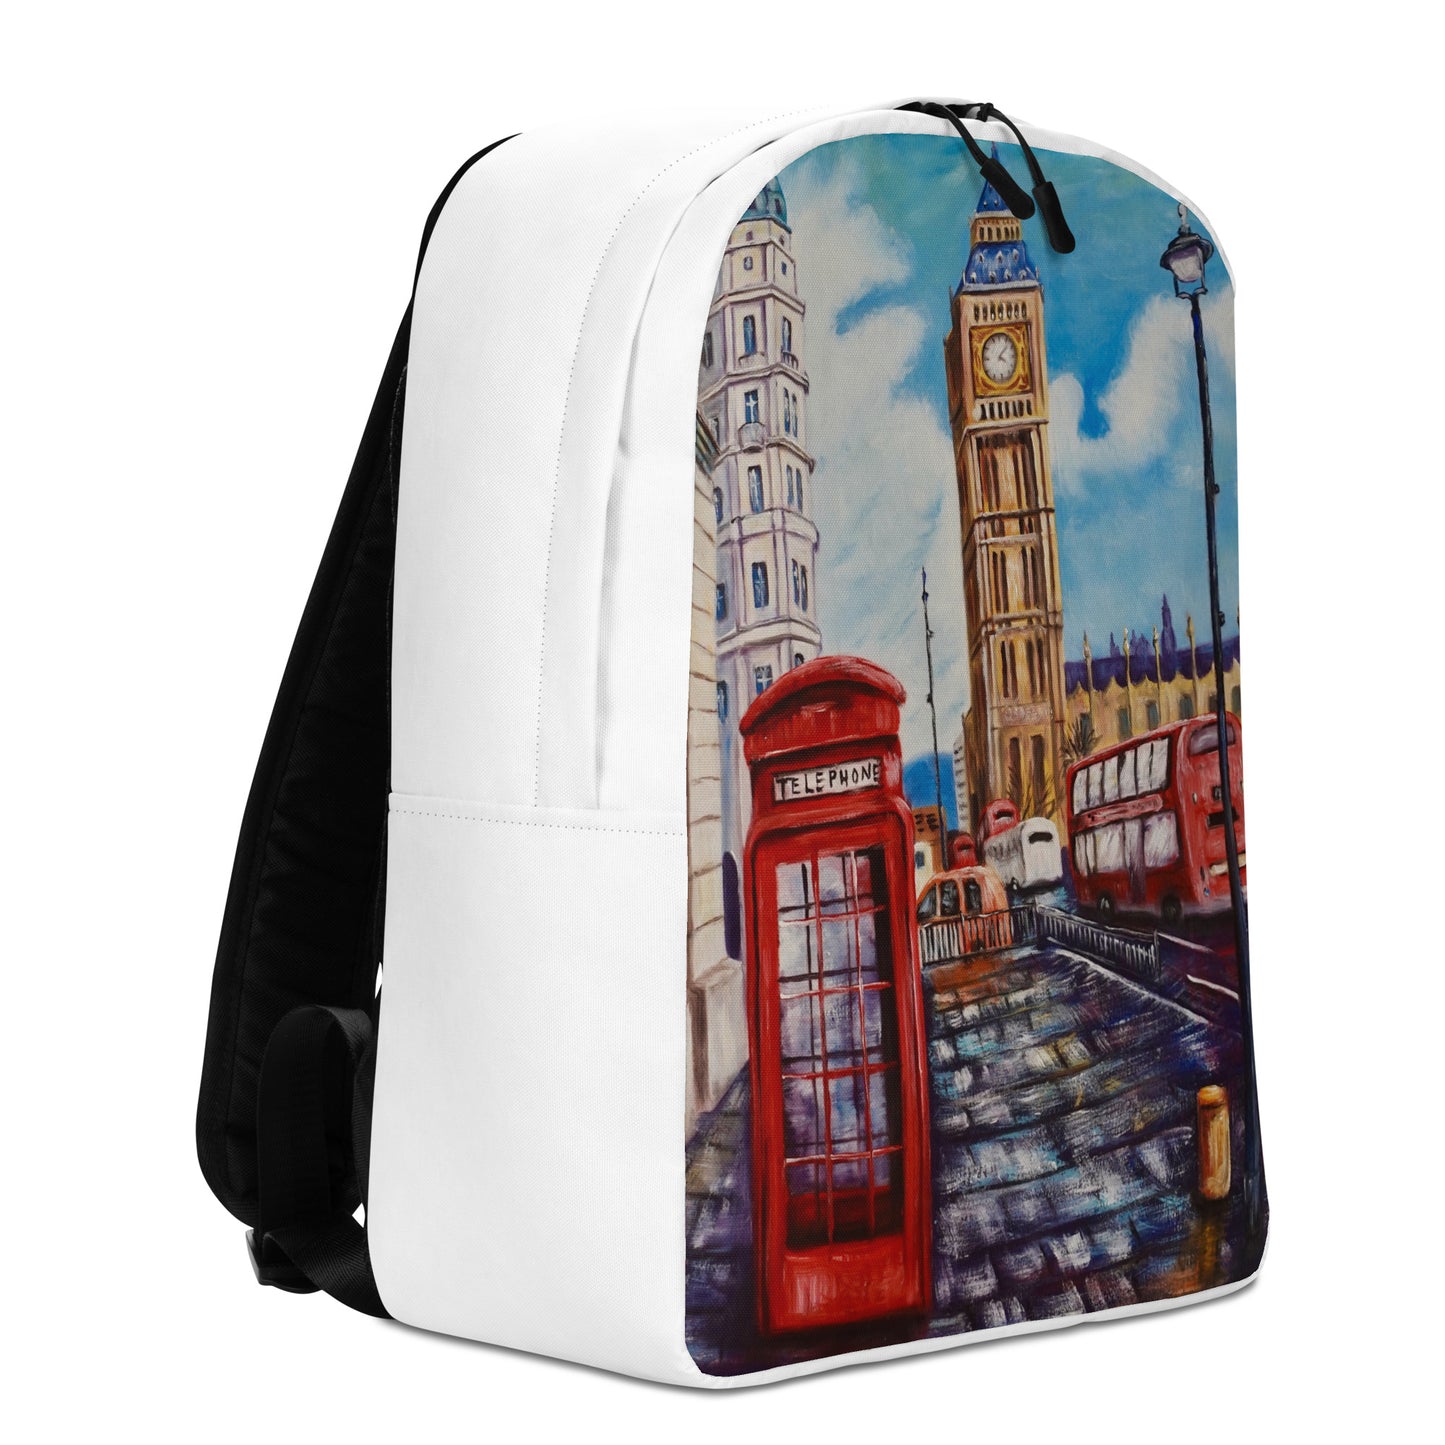 Backpack "London" Ideal for laptop Secret pocket Travel Art